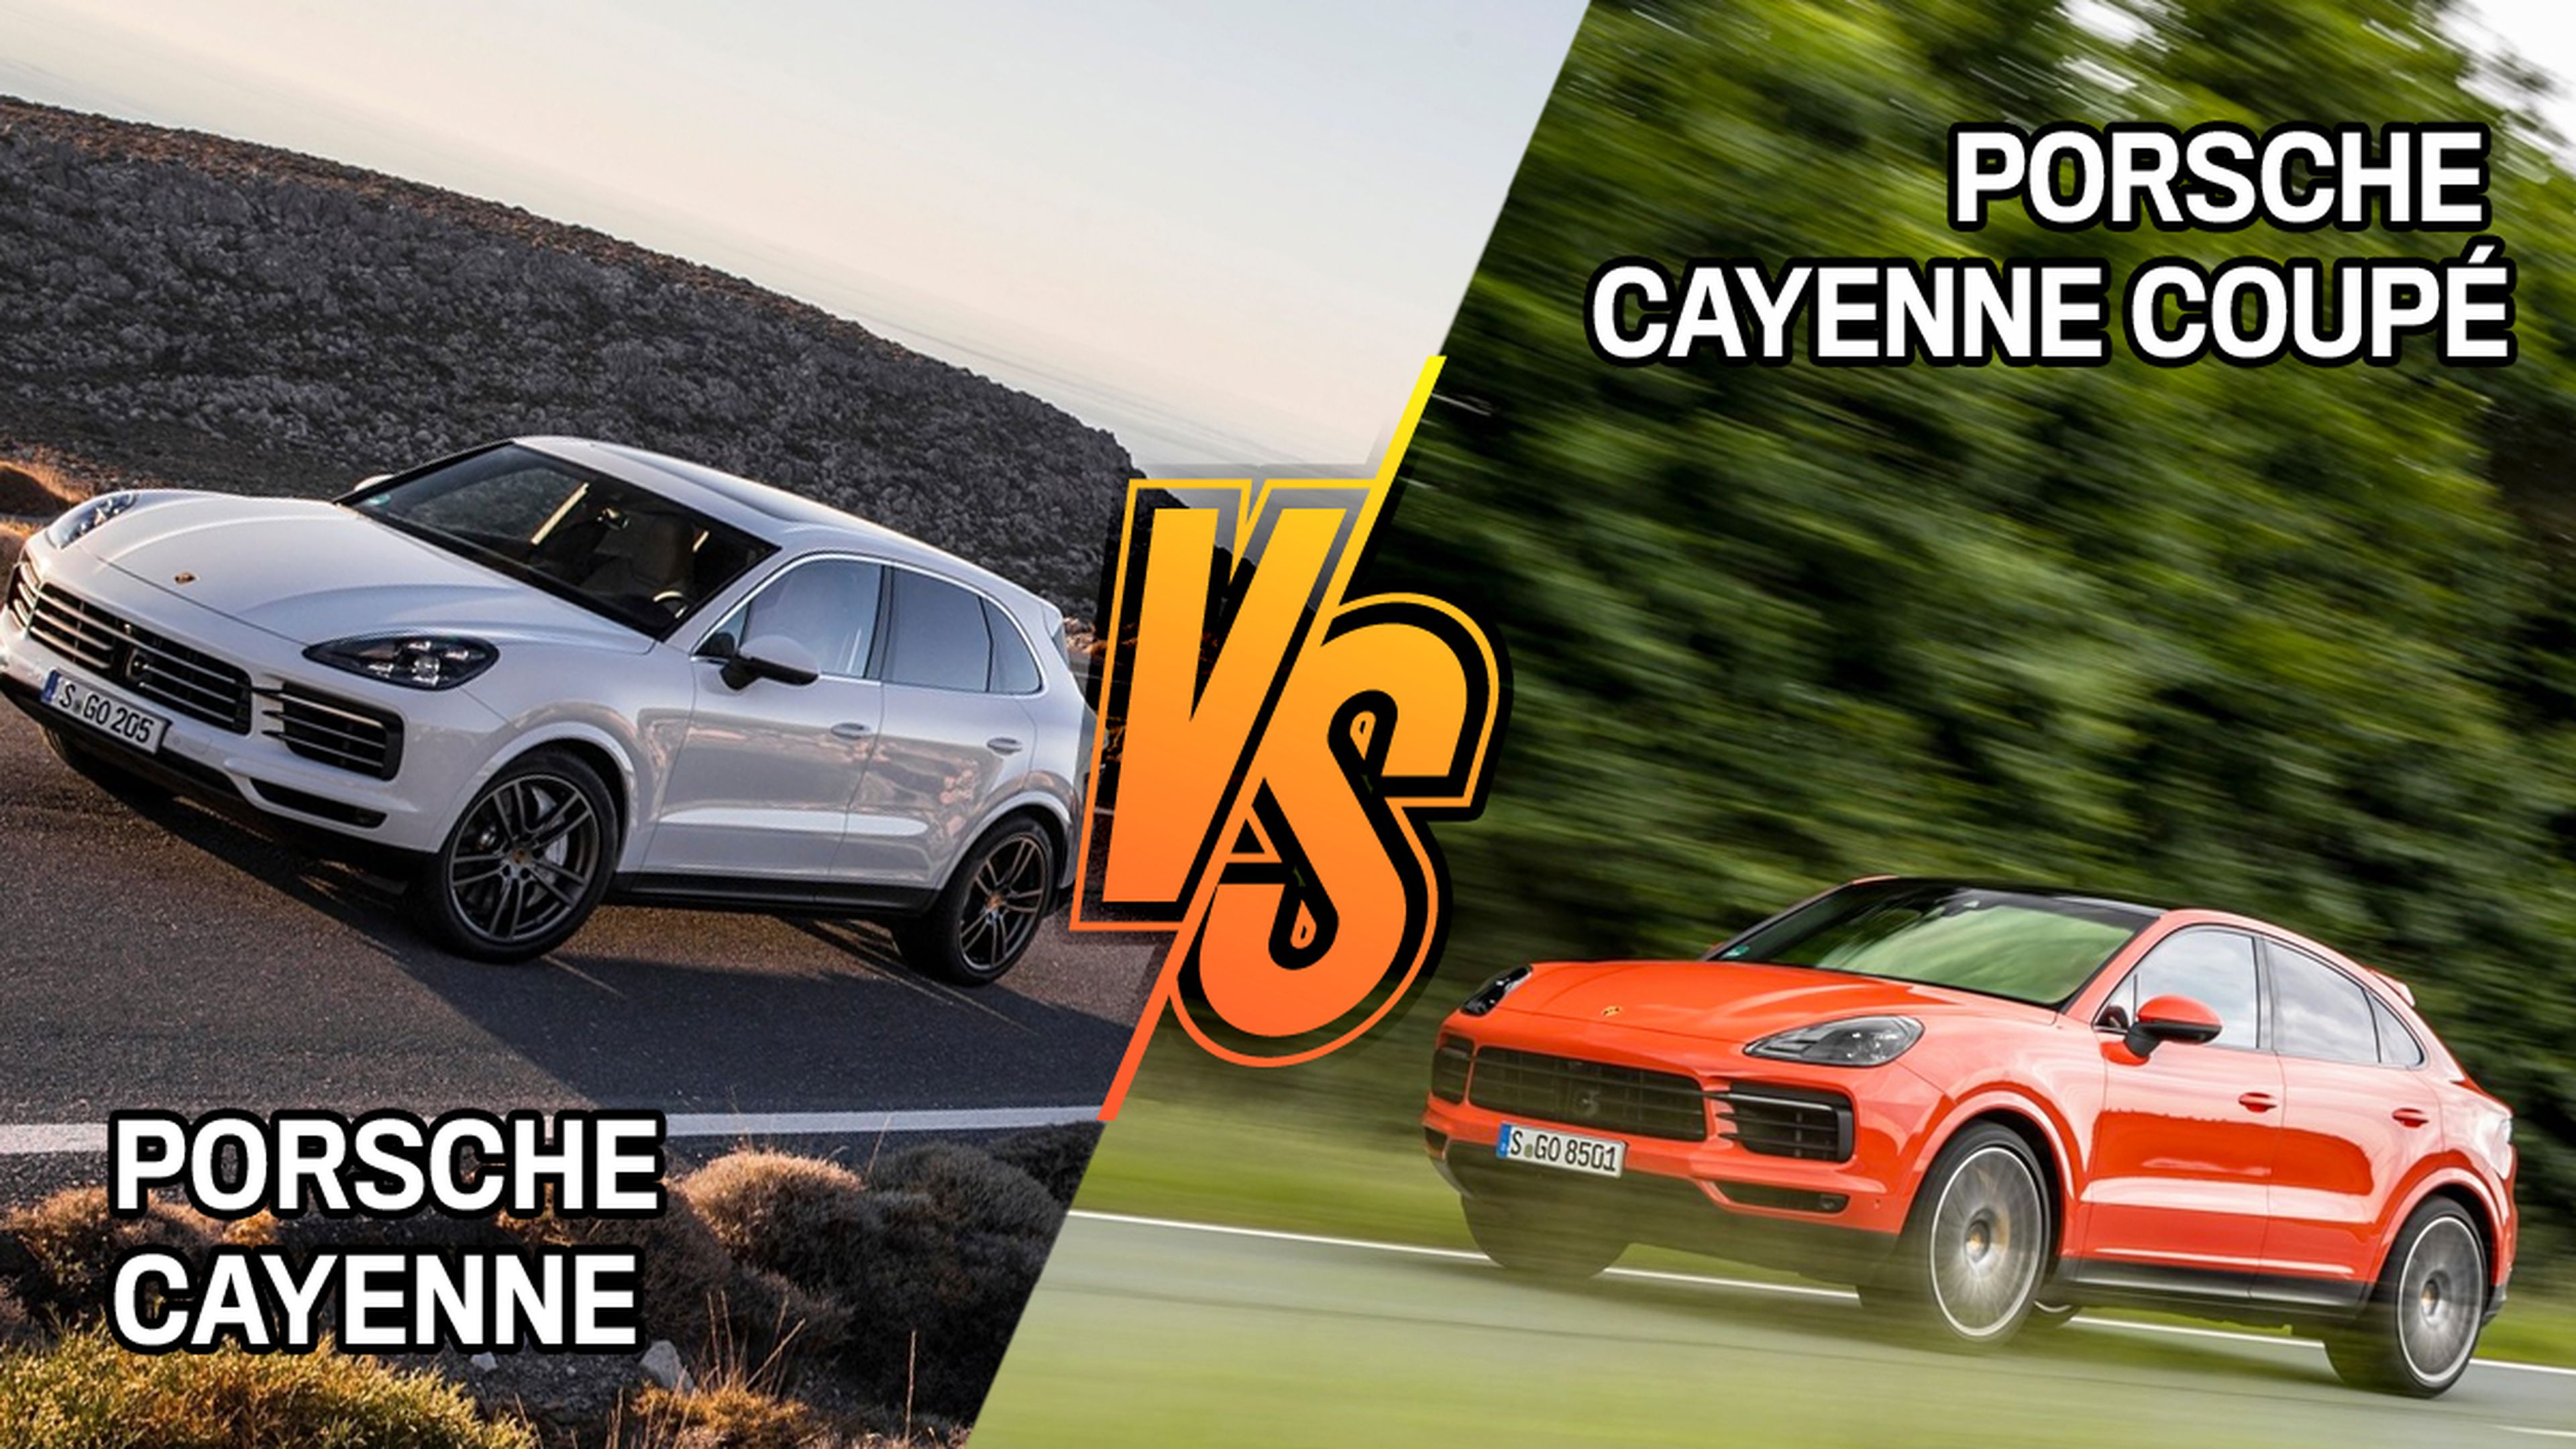 Porsche Cayenne o Cayenne Coupé, ¿cuál es más recomendable?